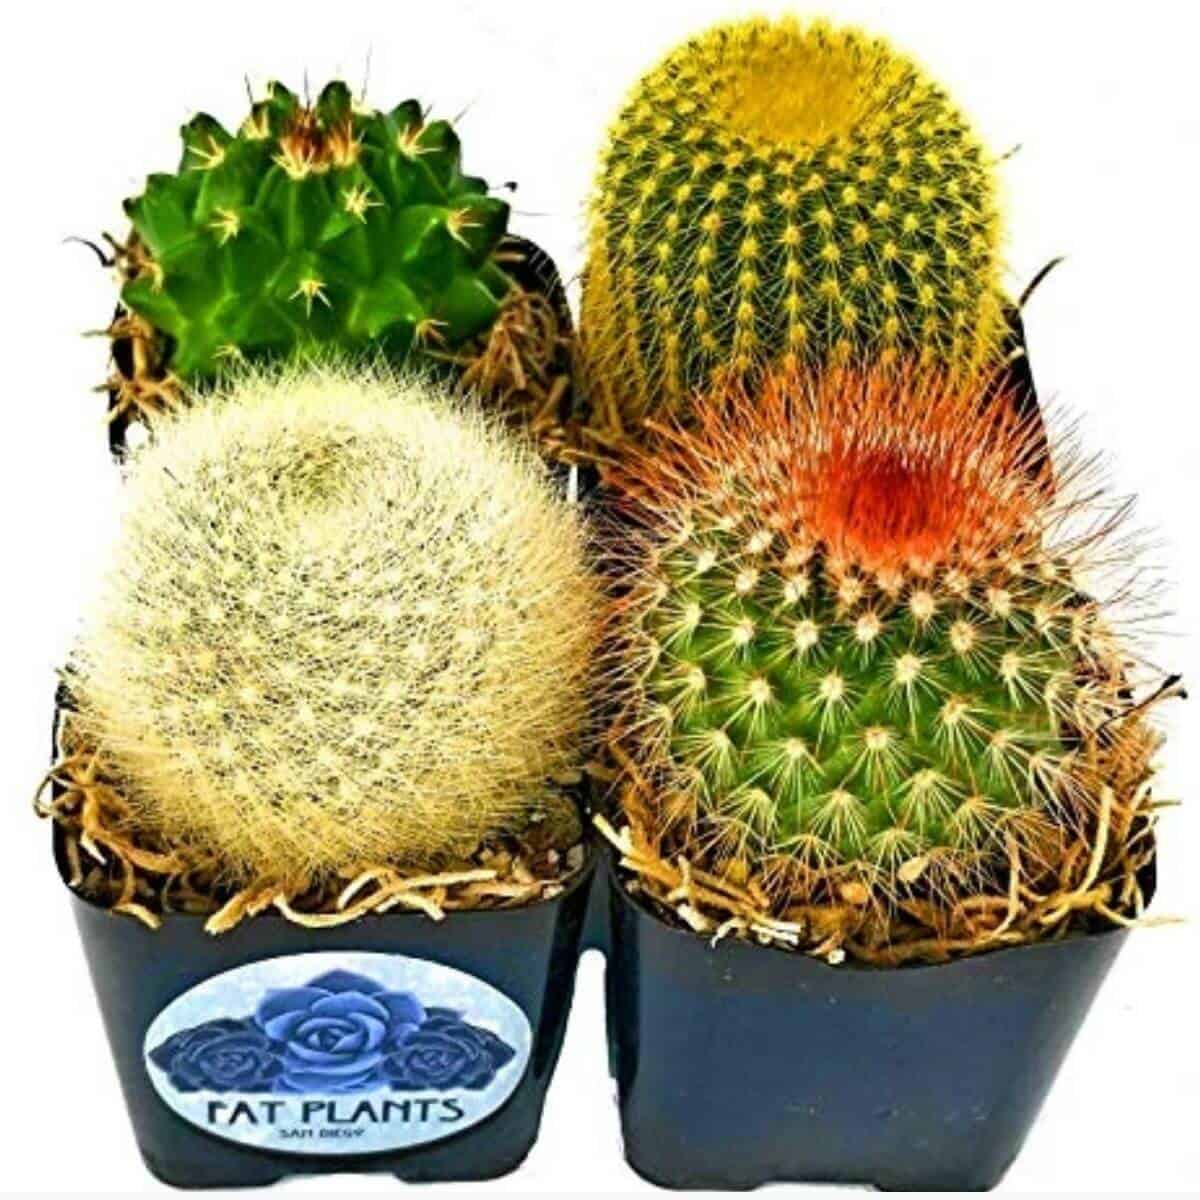 Four mini cacti in black planters.